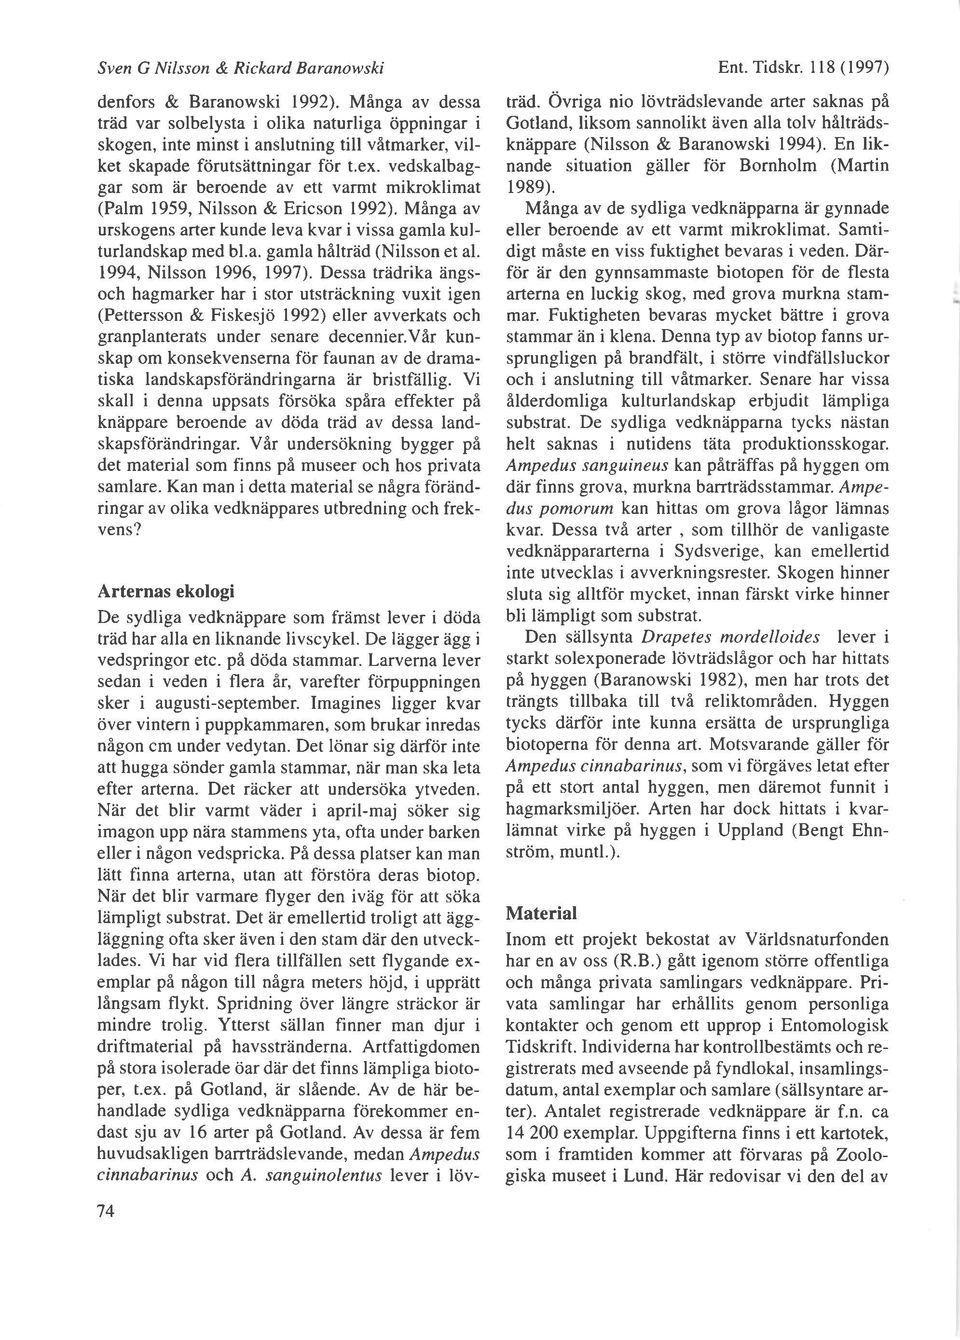 vedskalbaggar som dr beroende av ett varmt mikroklimat (Palm 1959, Nilsson & Ericson 1992). Minga av urskogens arter kunde leva kvar i vissa gamla kulturlandskap med bl.a. gamla hiltriid (Nilsson et al.